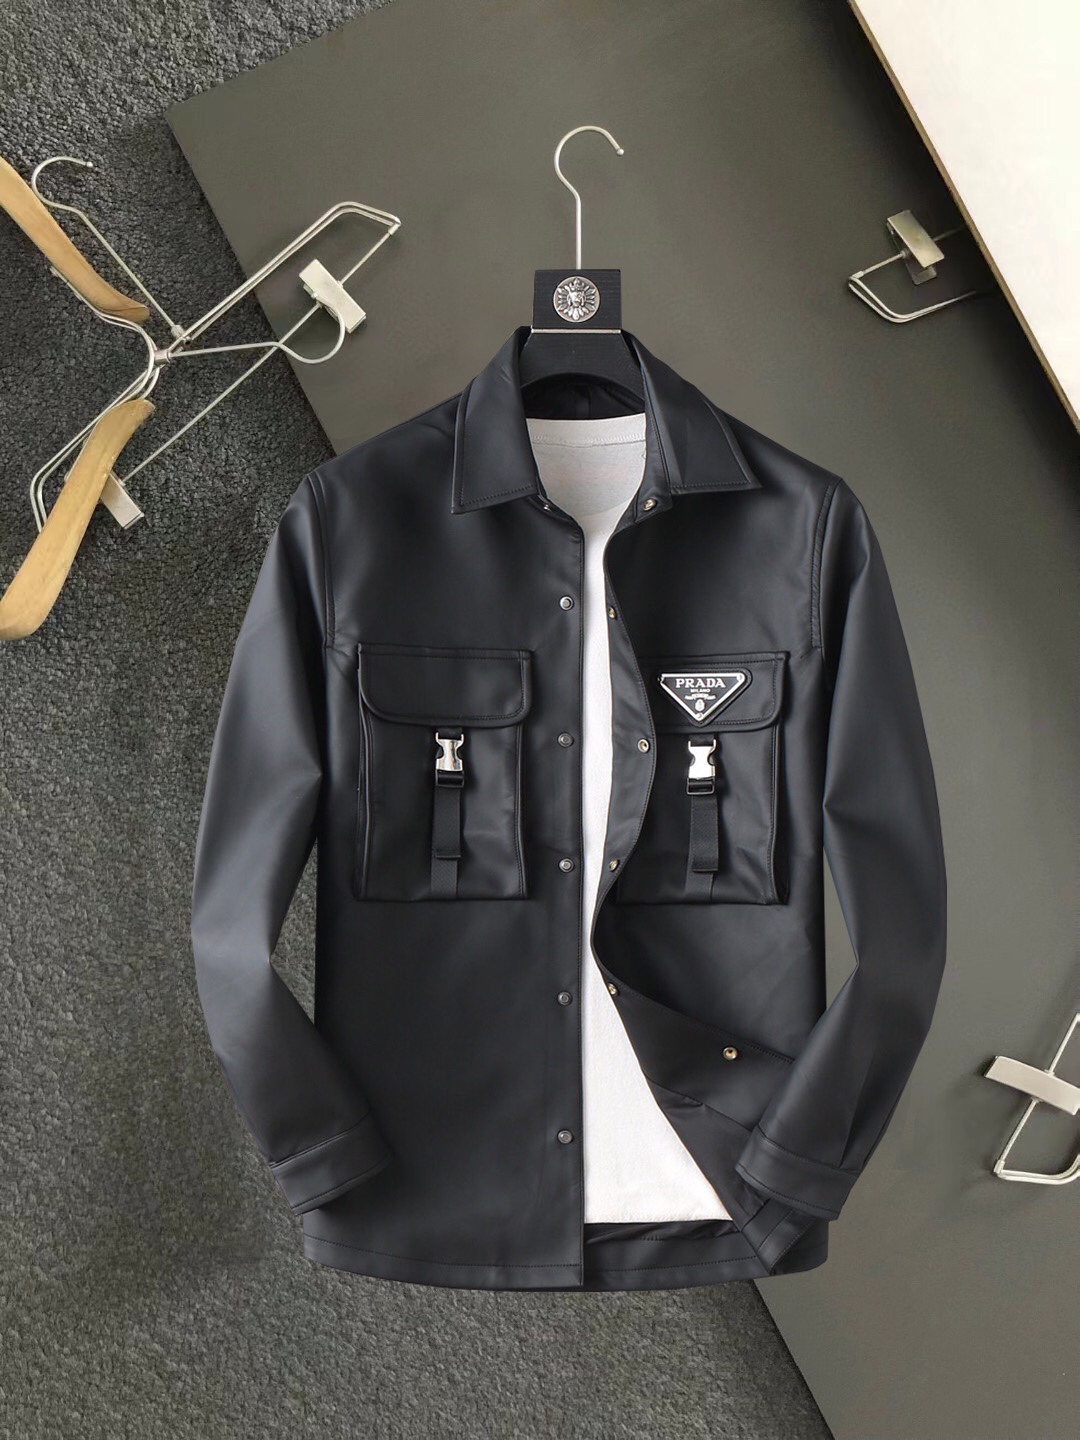 Buy High-Quality Fake
 Prada 1:1
 Clothing Coats & Jackets Printing Fall/Winter Collection Fashion